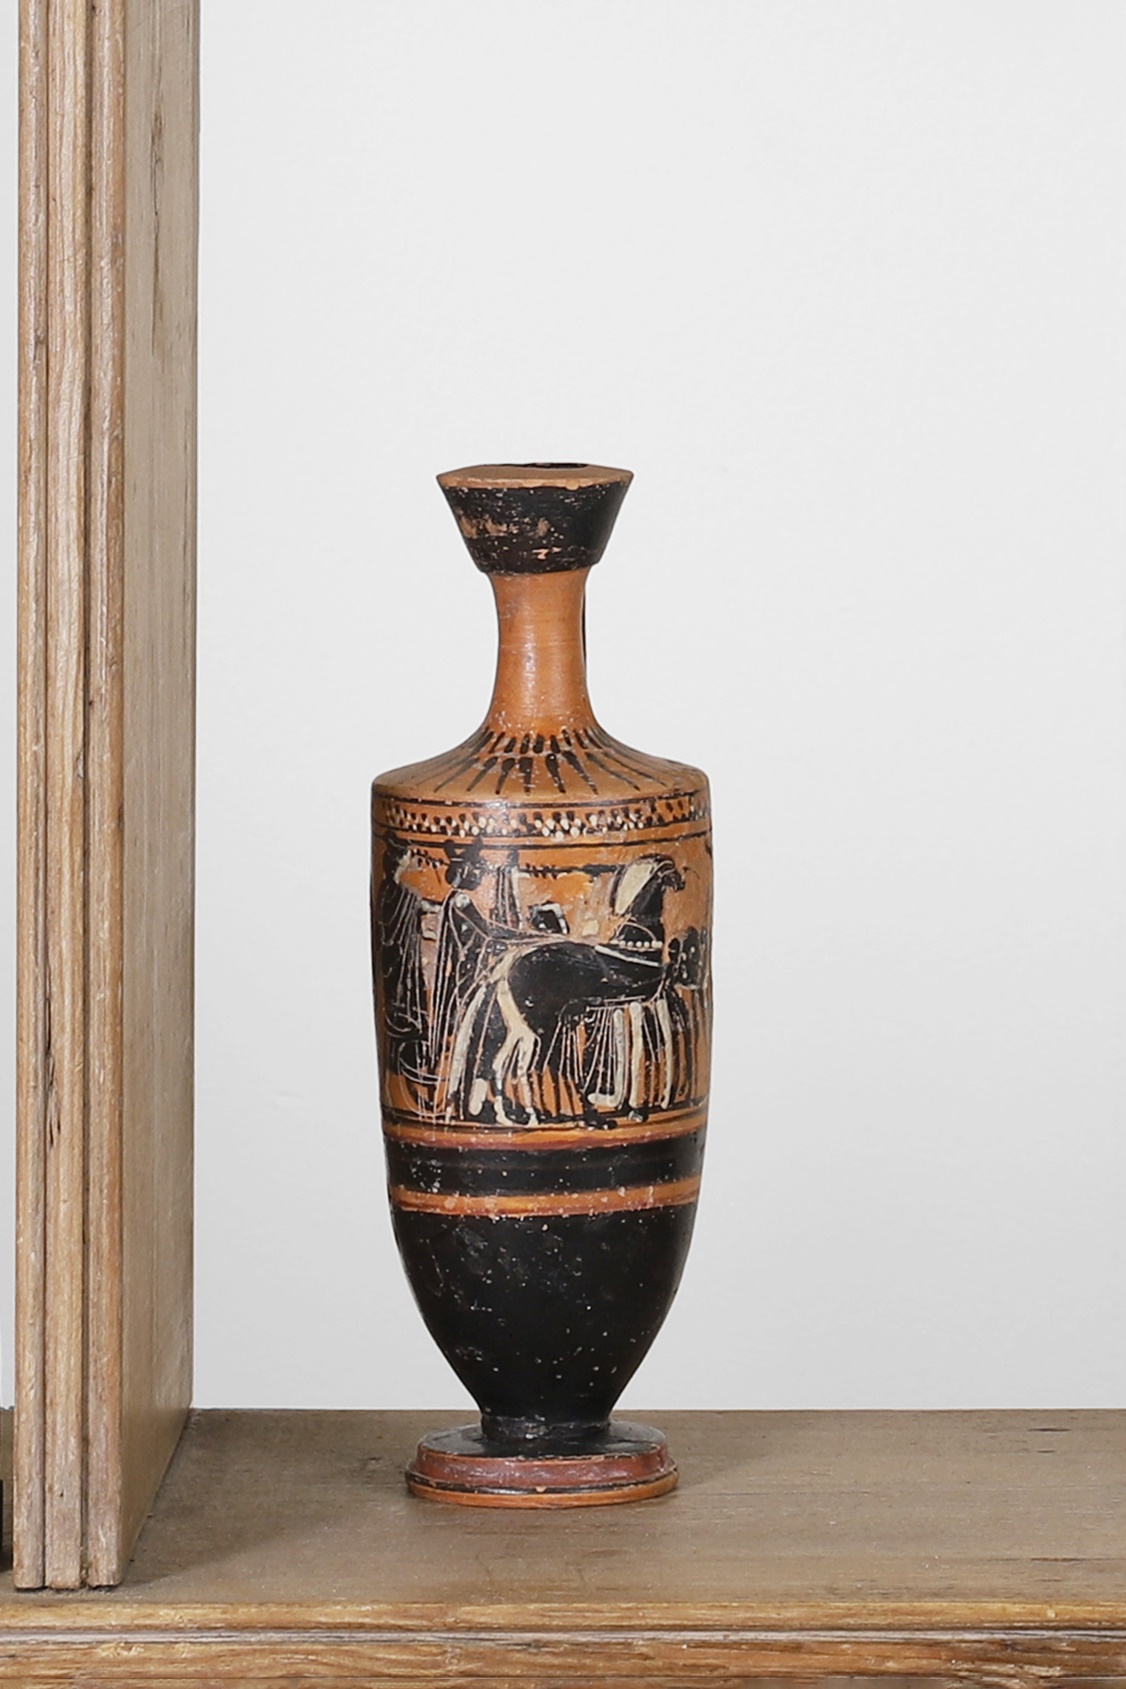 An ancient Greek black-figure lekythos vessel